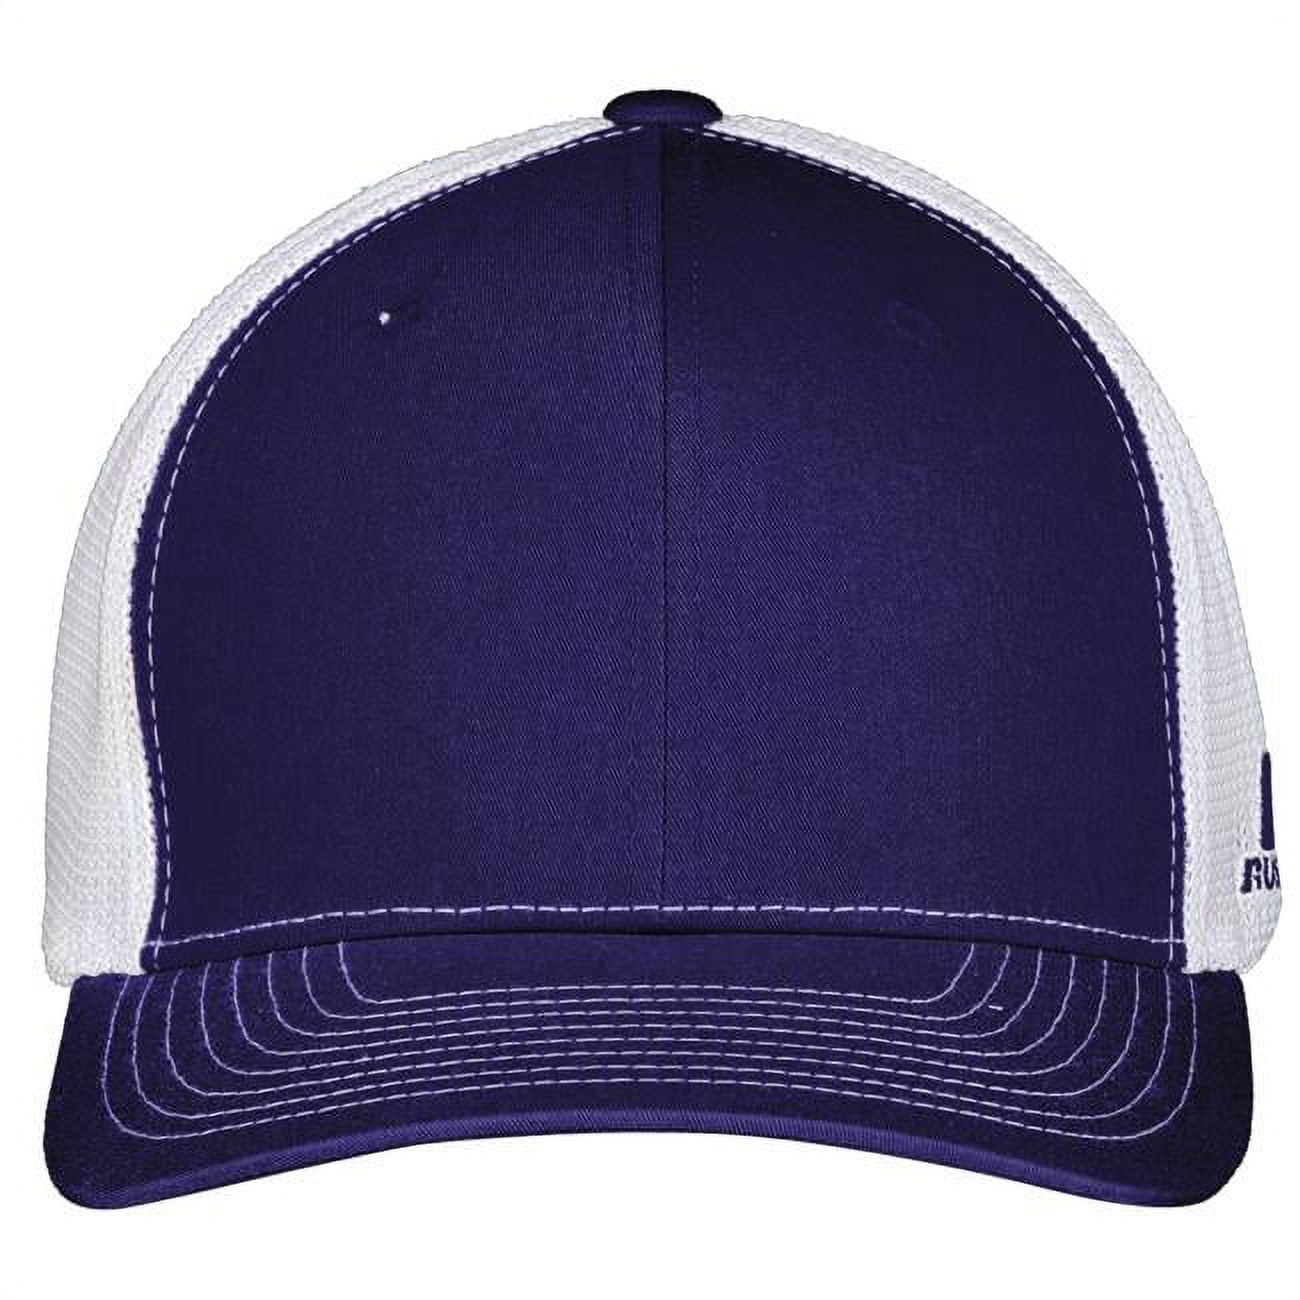 Youth Flexfit Twill Mesh Cap, Purple & White - One Size